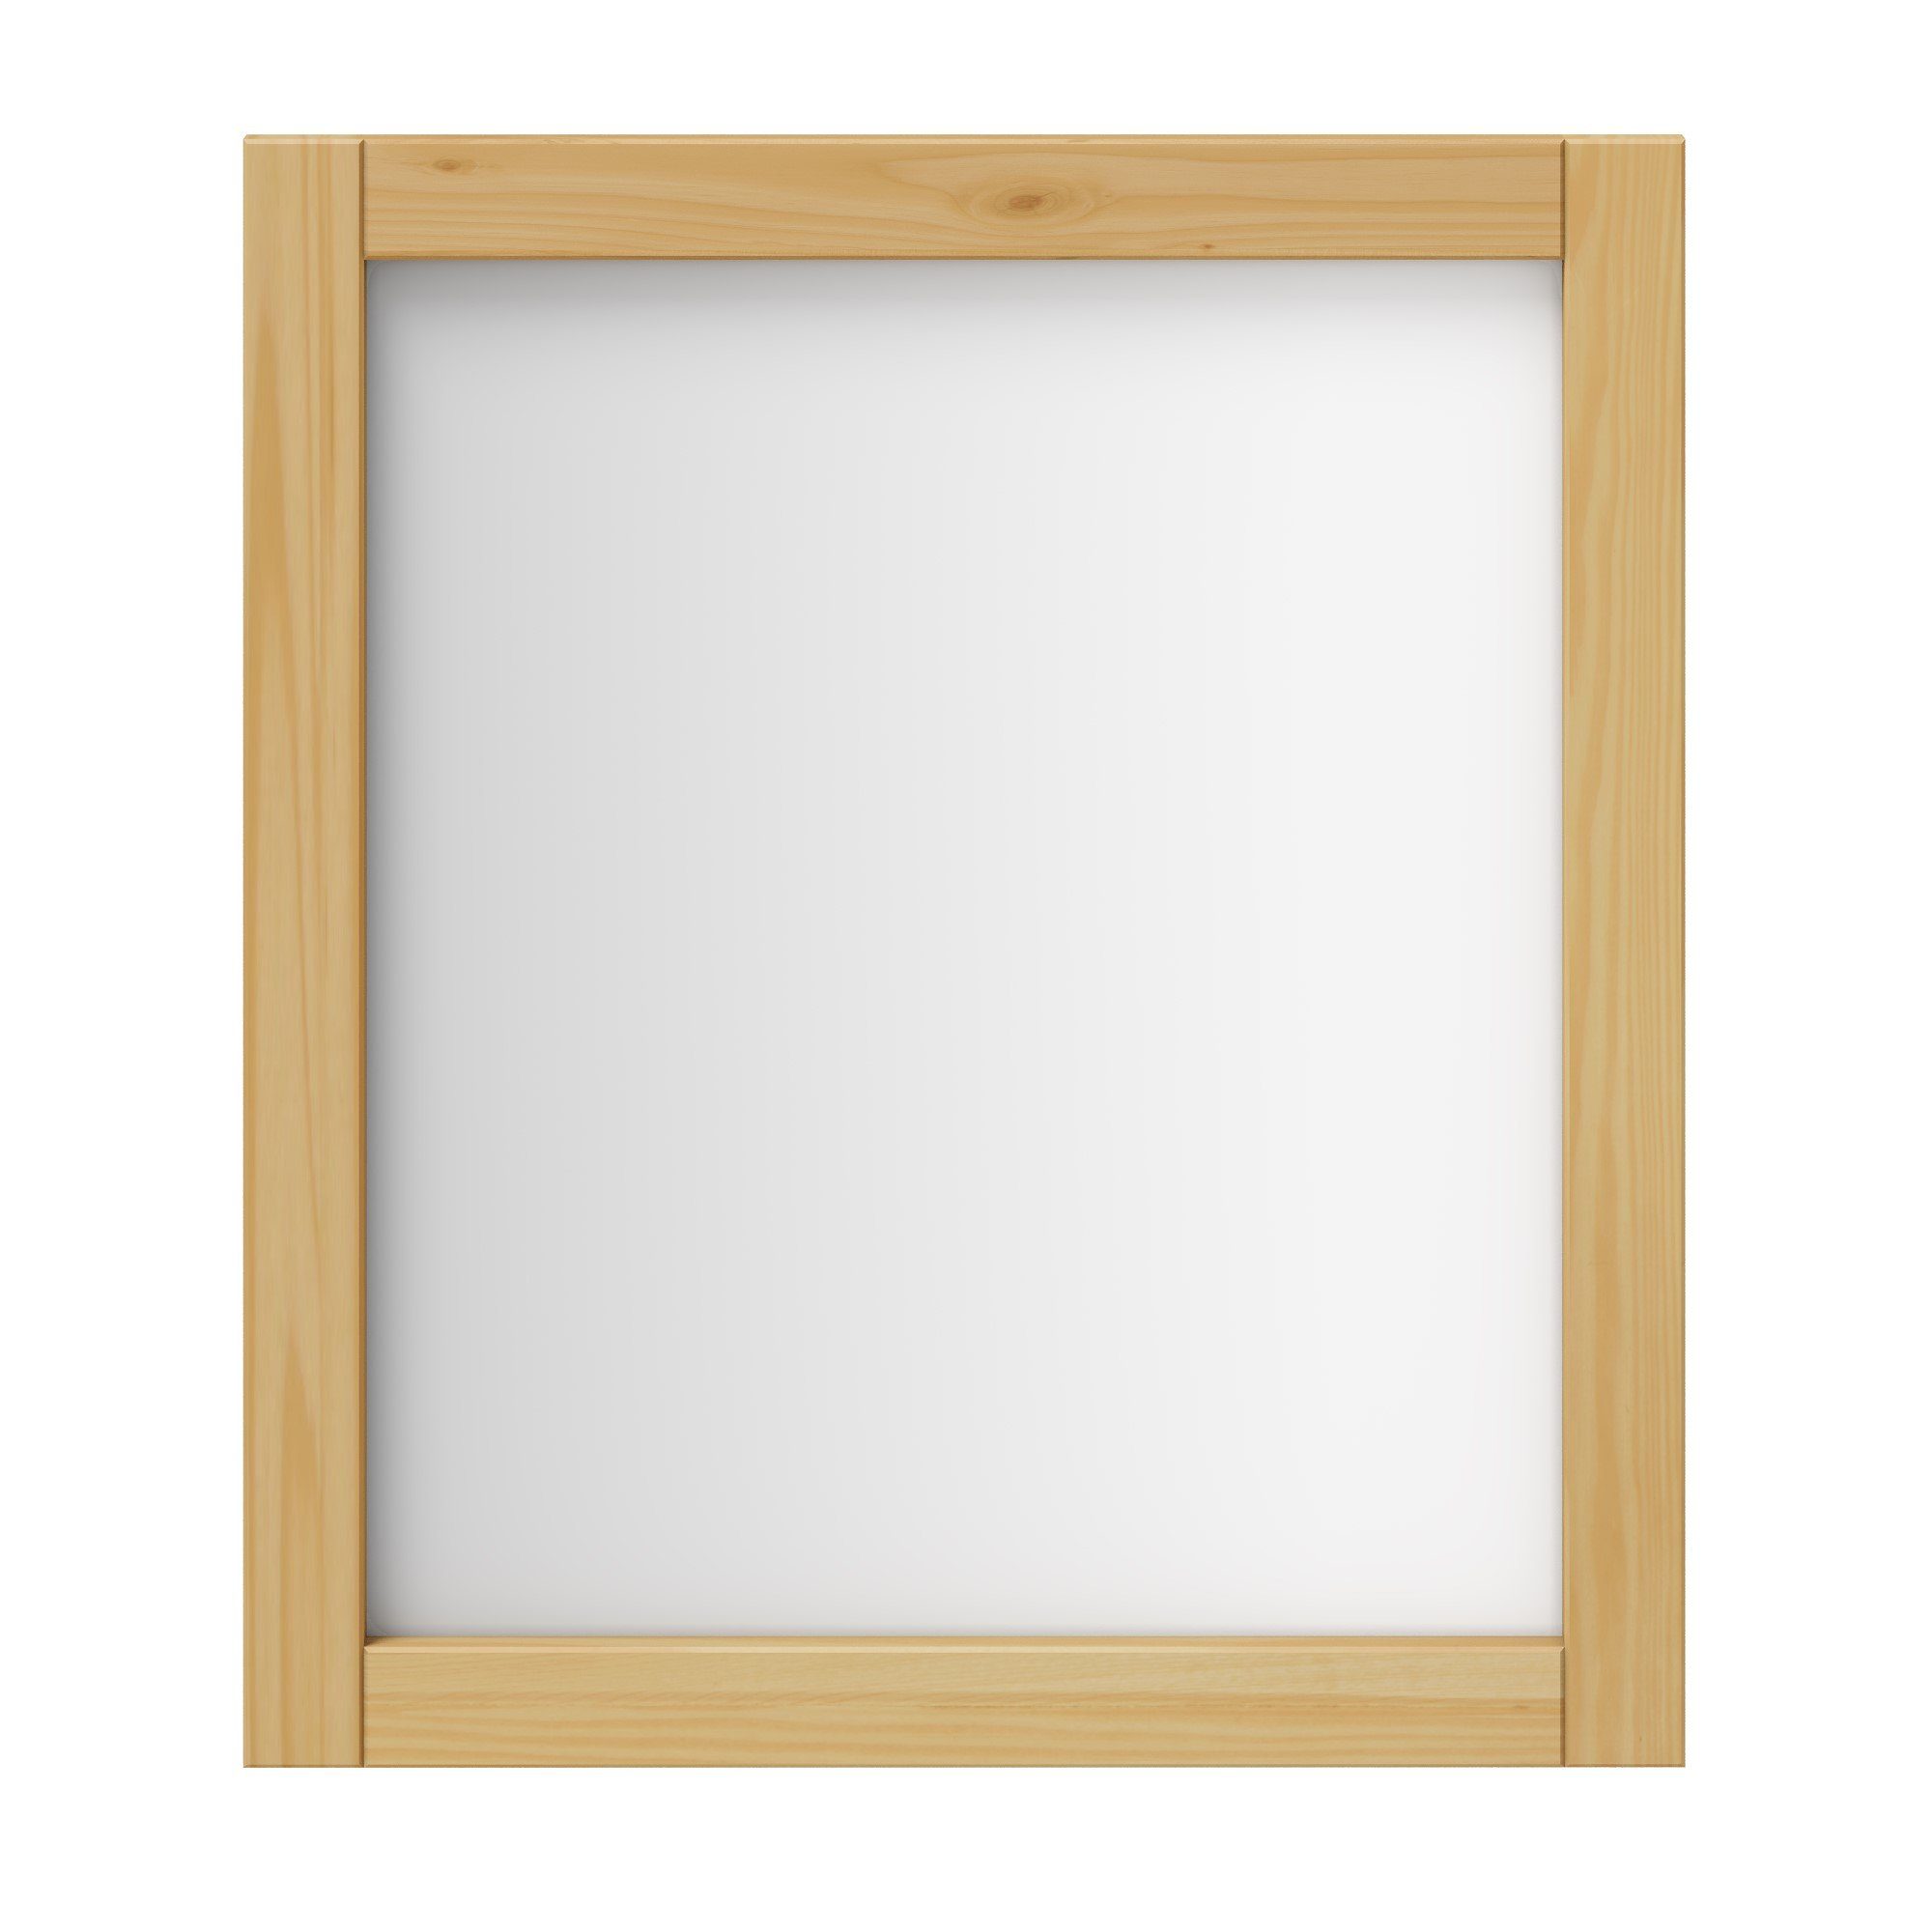 Woodroom Spiegel Sevilla, Kiefer massiv eichefarig lackiert, BxHxT 62x70x3 cm